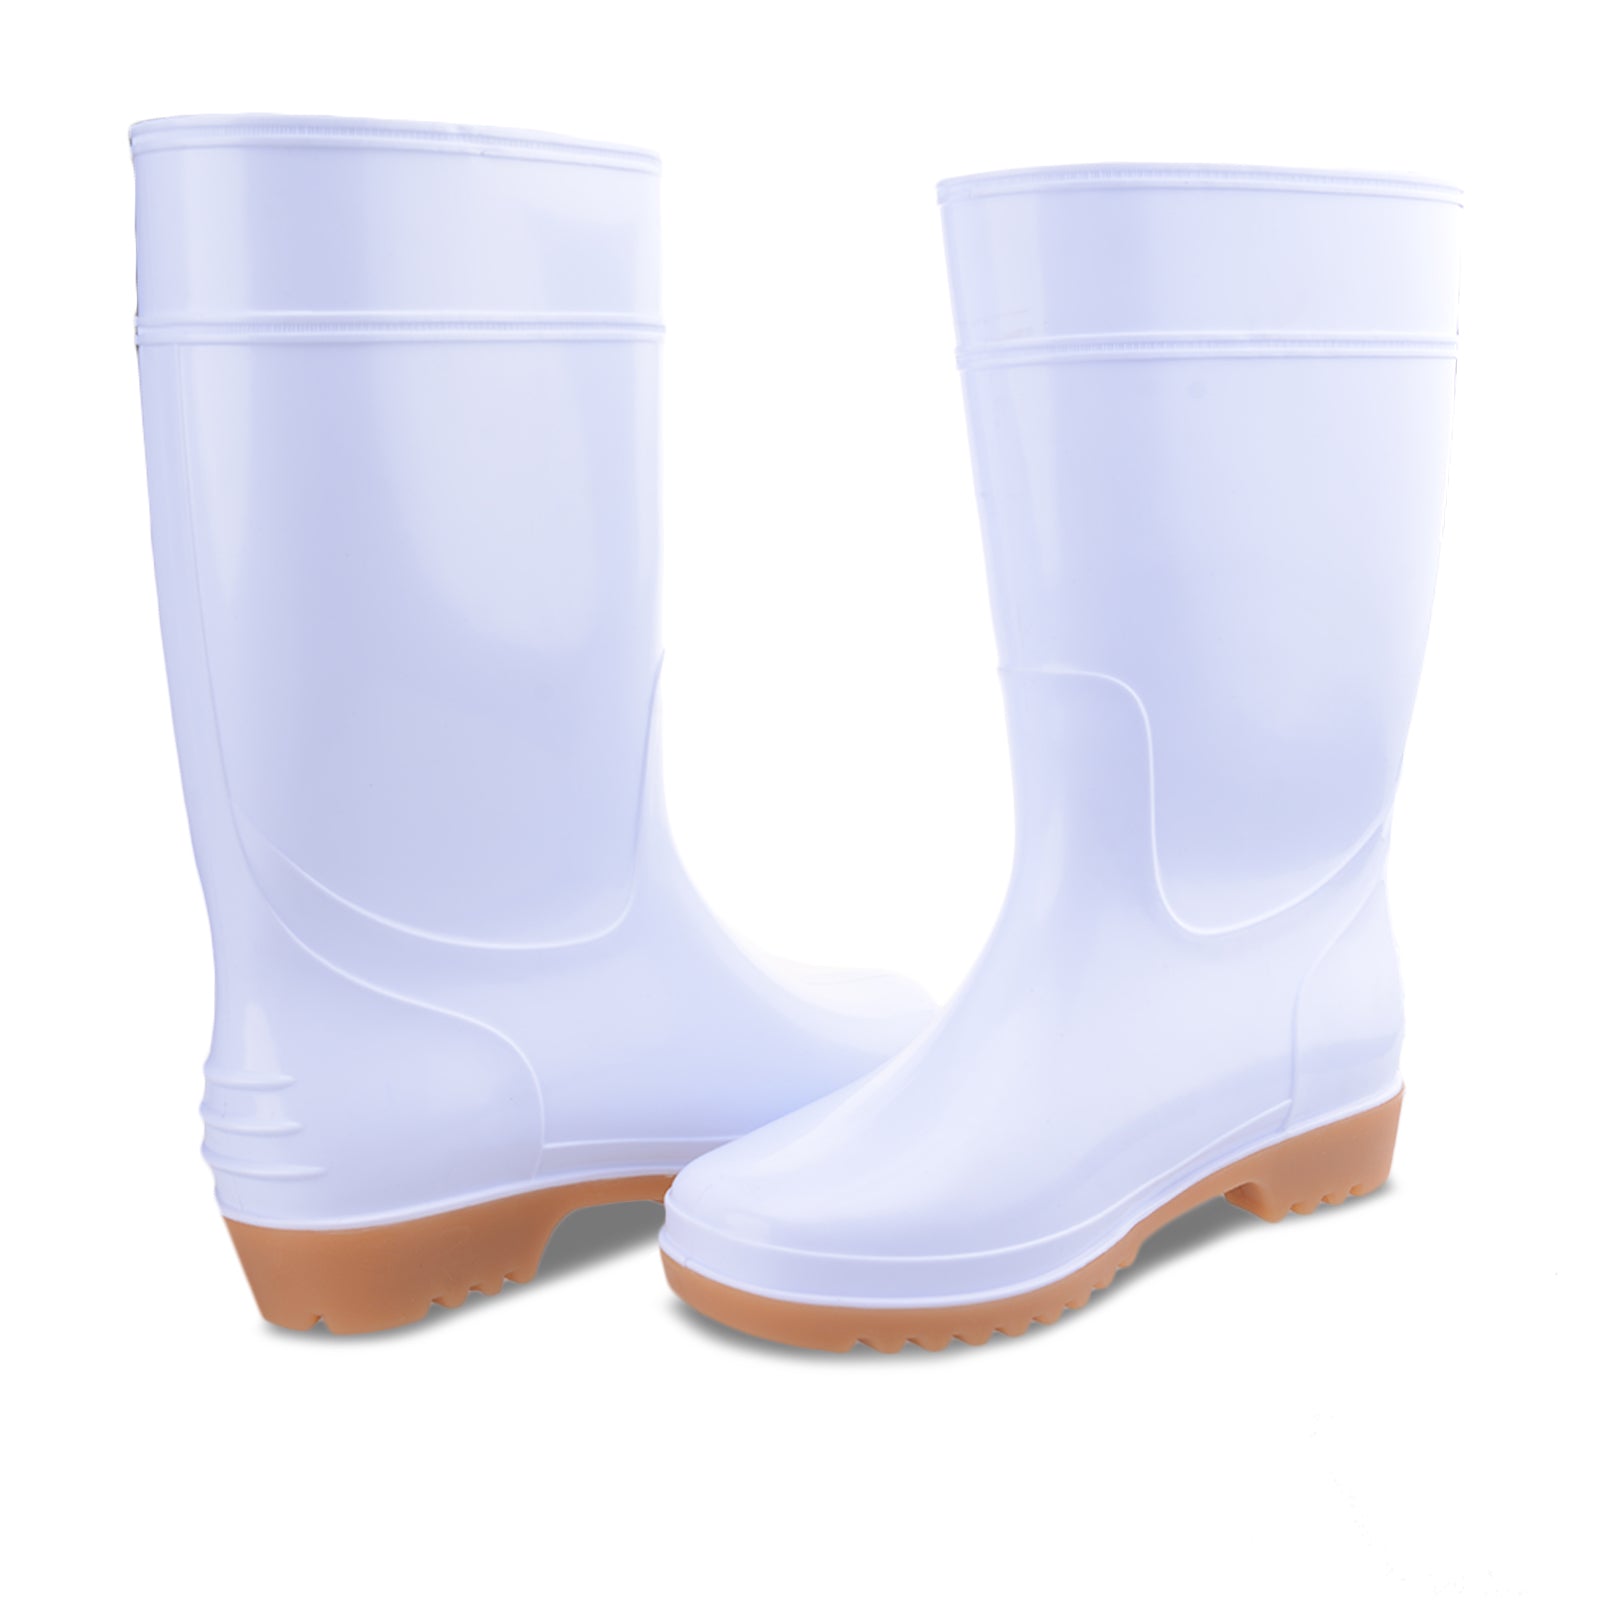 LT301-M Long Labor Rain Boots (Hong Kong Safety Mark)-FAST-WH-EU Size: 36-偉豐鞋 WELL SHOE HK-Well Shoe-偉豐鞋-偉豐網-荃灣鞋店-Functional shoes-Hong Kong Tsuen Wan Shoe Store-Tai Wan Shoe-Japan Shoe-高品質功能鞋-台灣進口鞋-日本進口鞋-High-quality shoes-鞋類配件-荃灣進口鞋-香港鞋店-優質鞋類產品-水靴-帆布鞋-廚師鞋-香港鞋品牌-Hong Kong Shoes brand-長者鞋-Hong Kong Rain Boots-Kitchen shoes-Cruthes-Slipper-Well Shoe Hong Kong-Anello-Arriba-休閒鞋-舒適鞋-健康鞋-皮鞋-Healthy shoes-Leather shoes-Hiking shoes